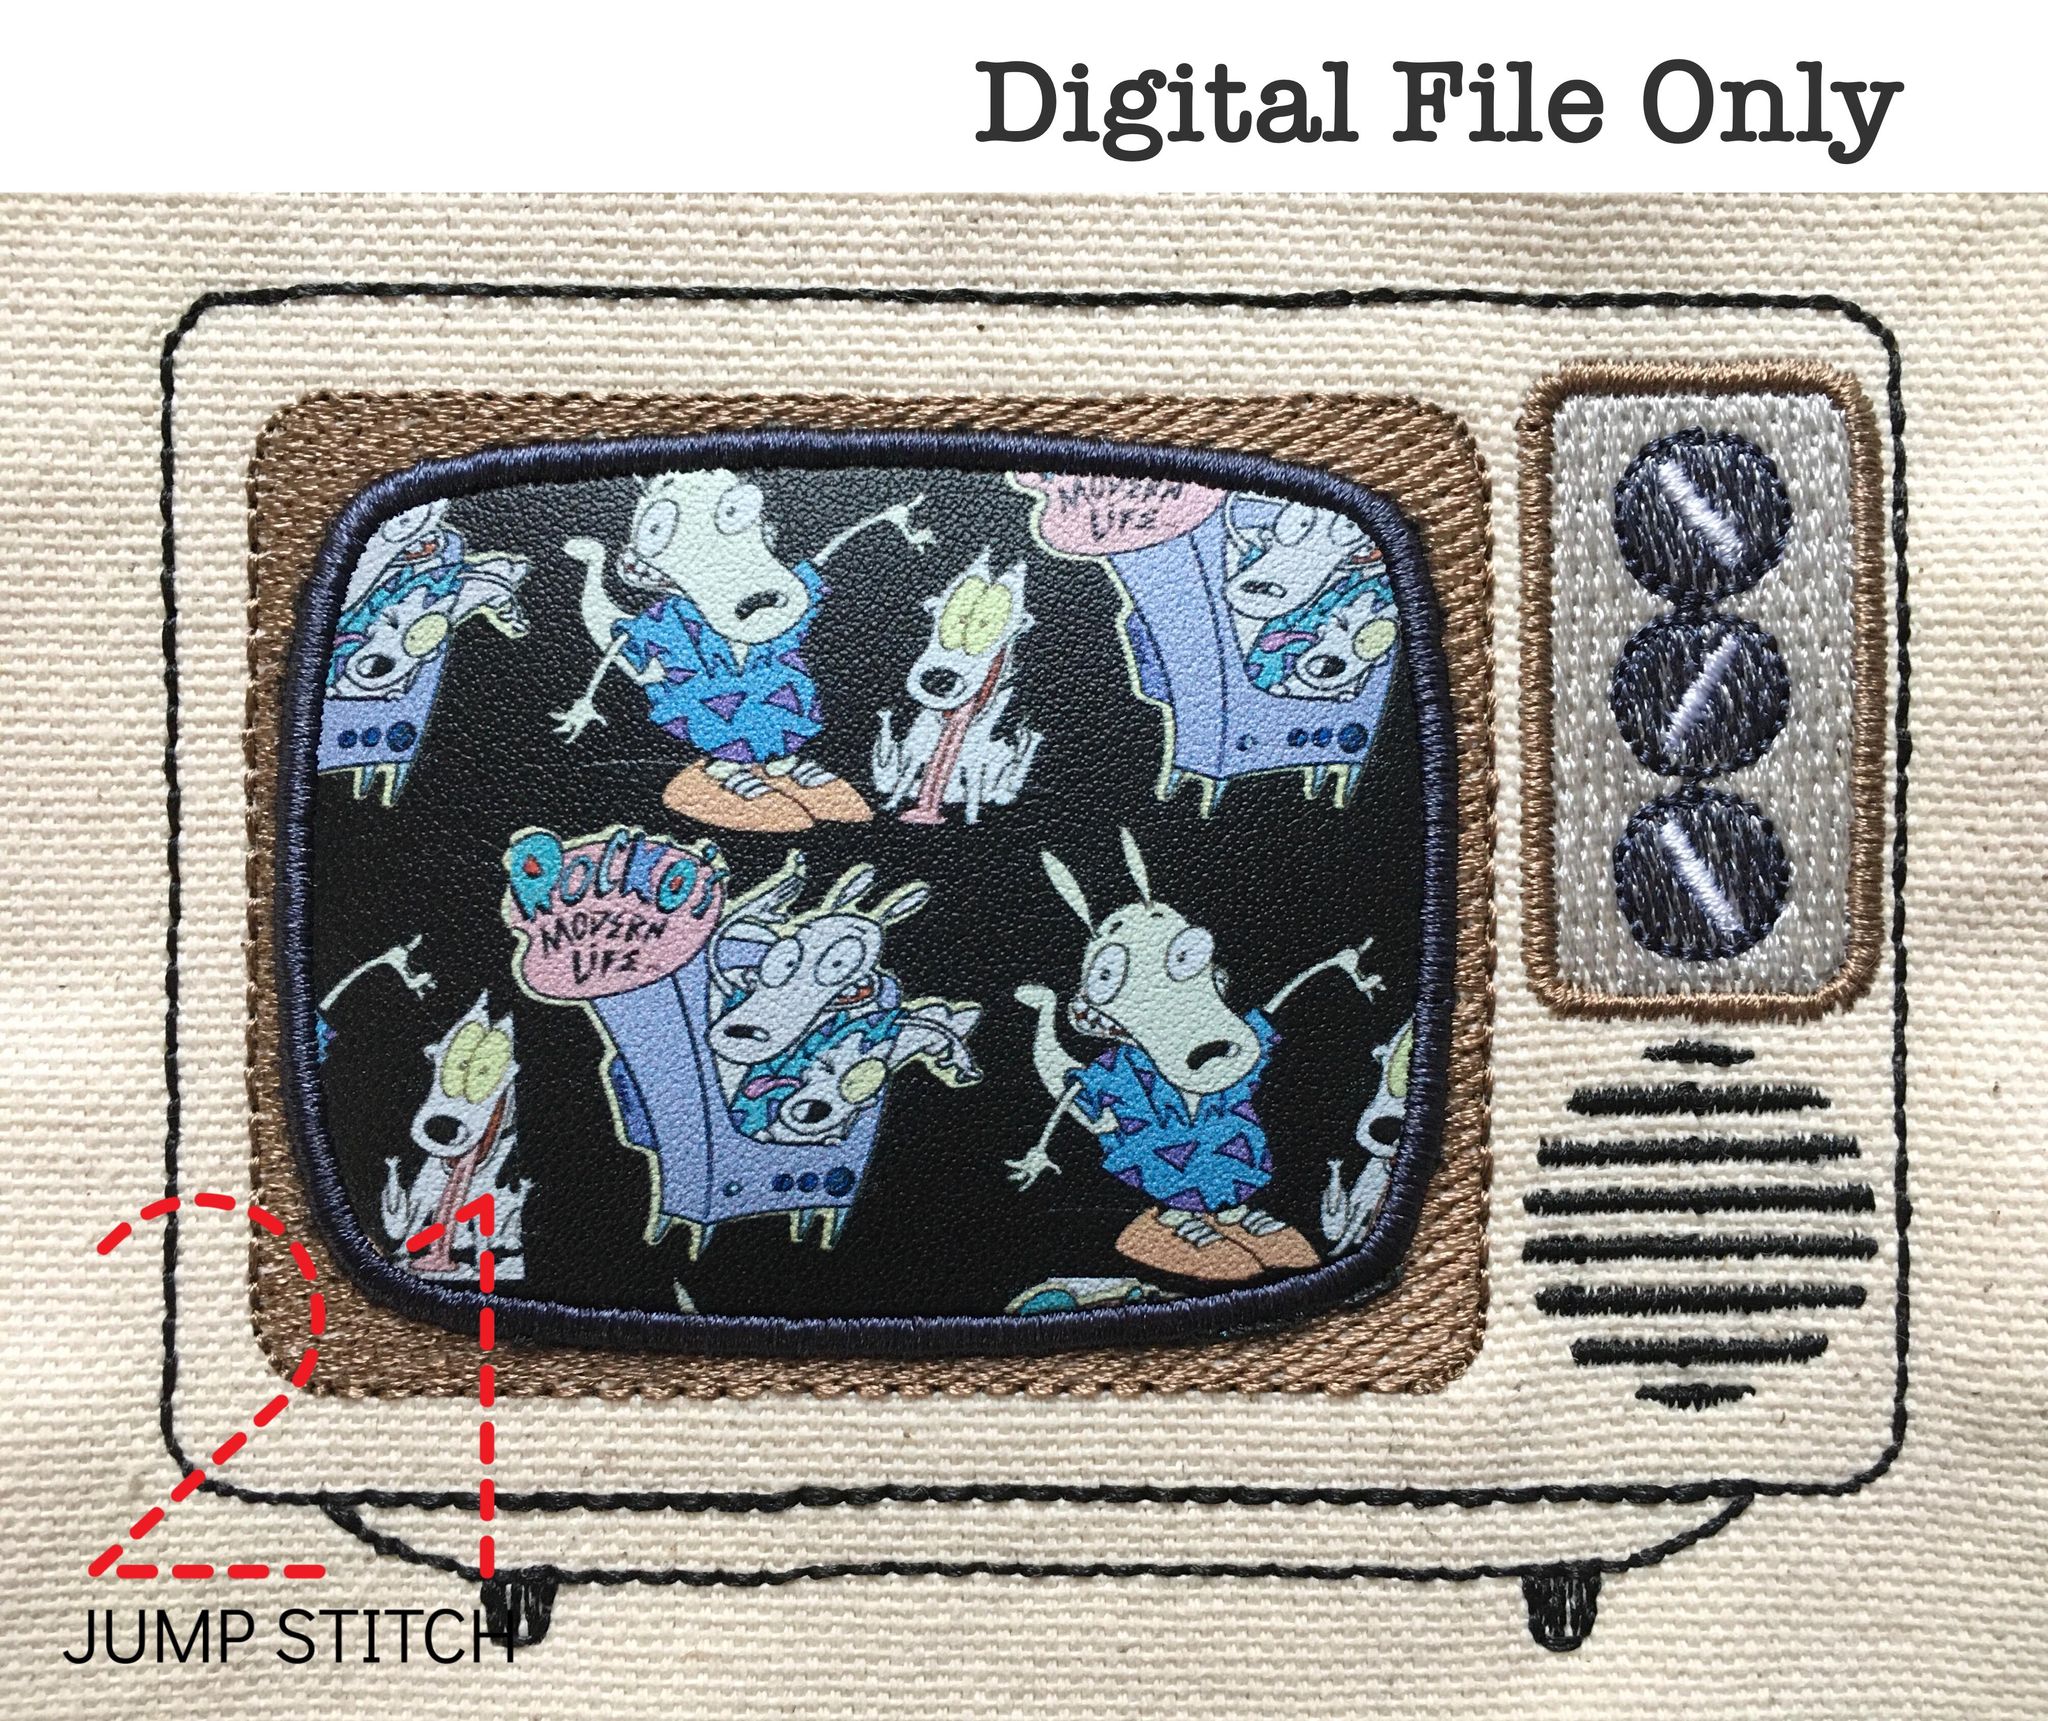 Retro TV Sketch w/Applique – 21 Jump Stitch